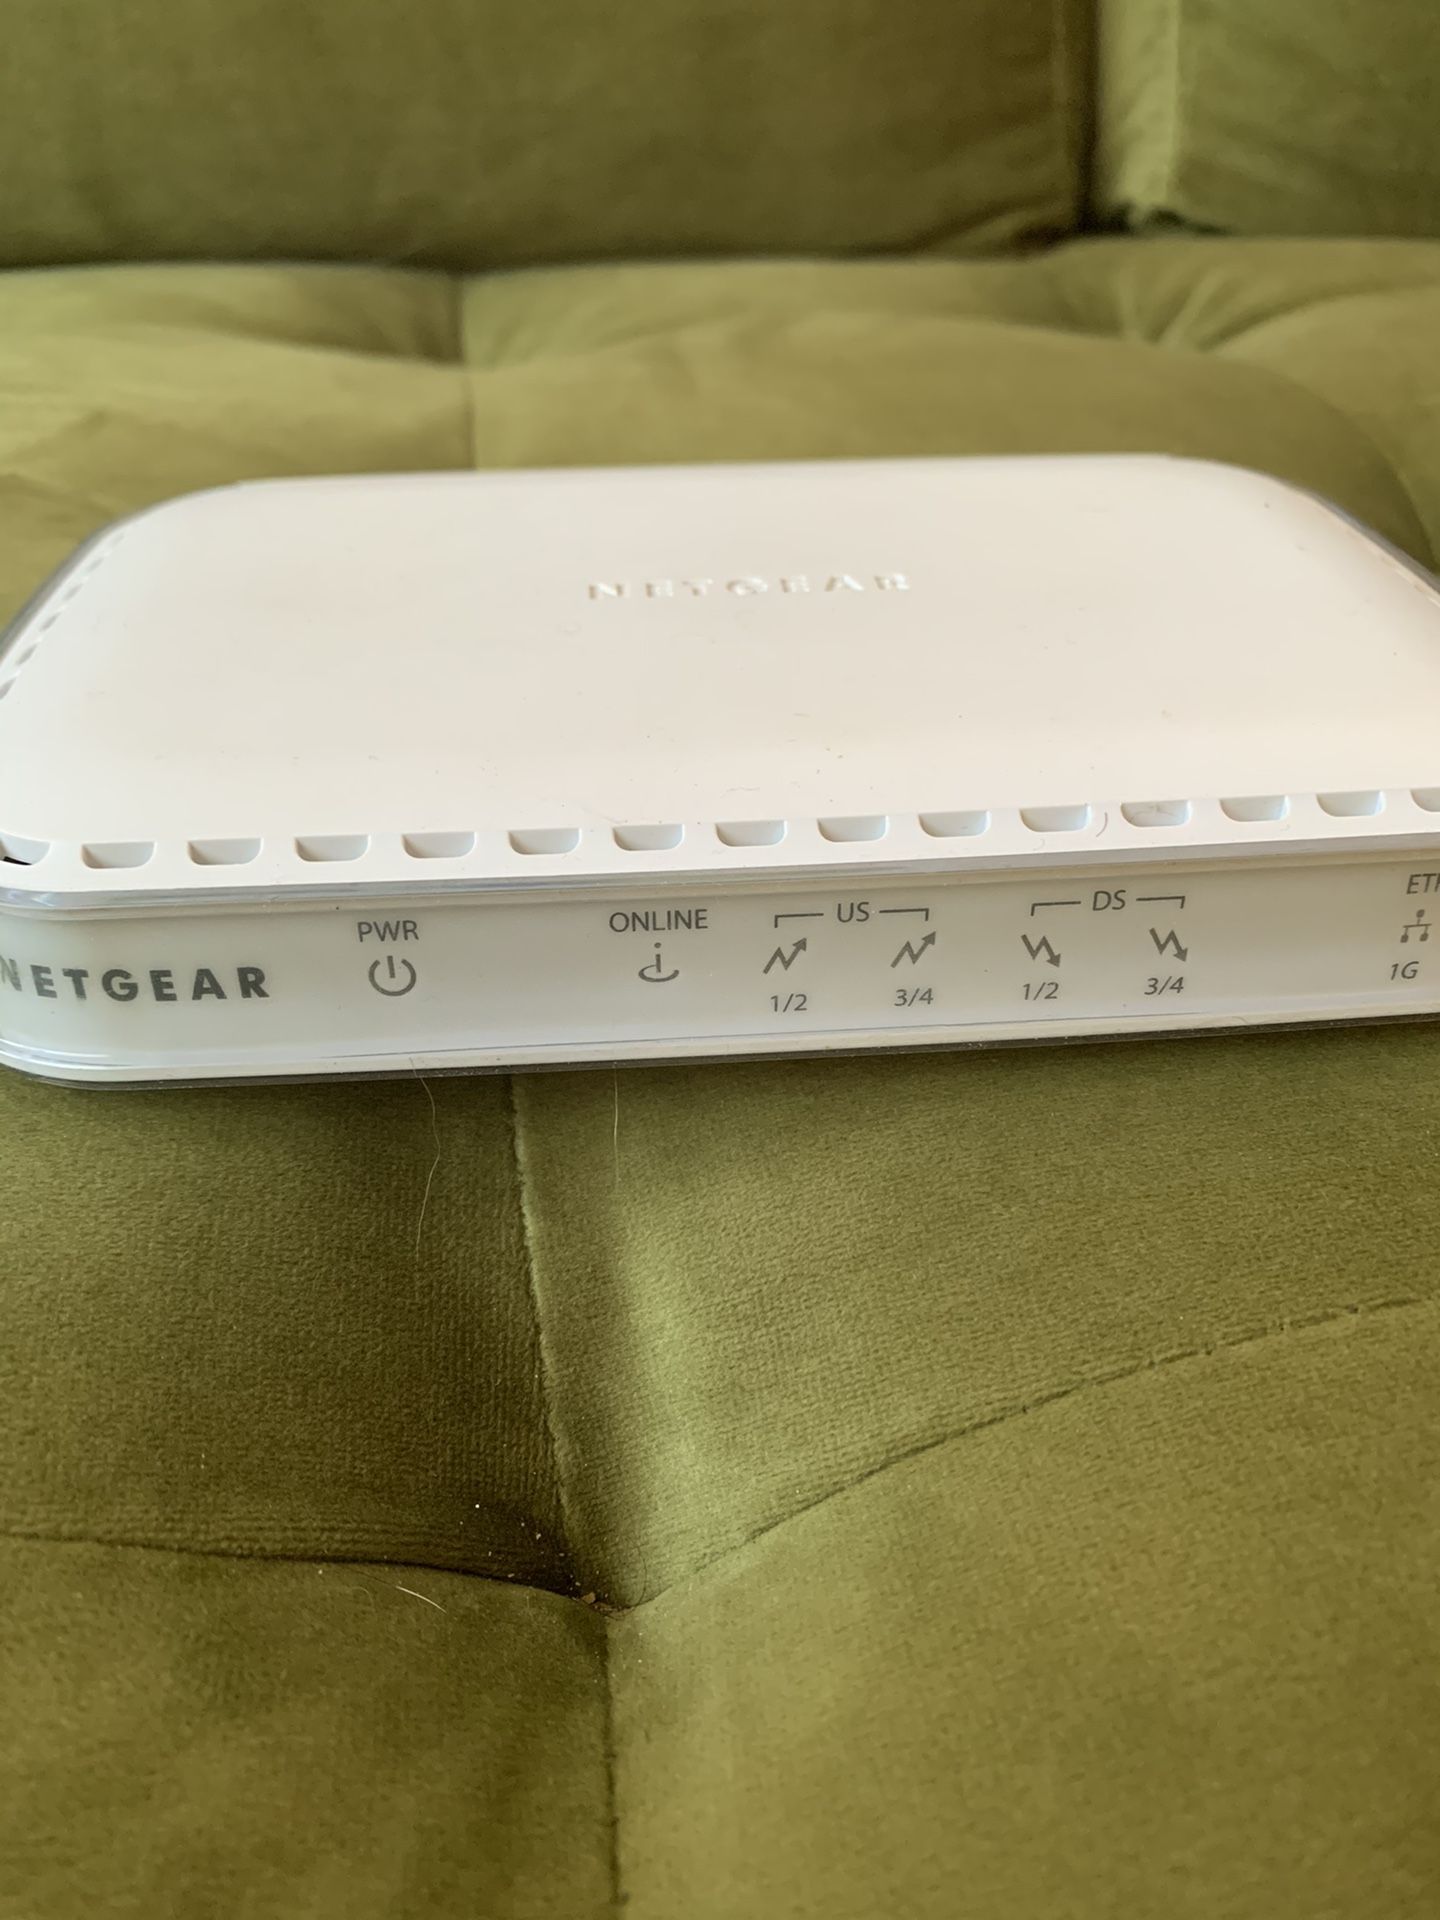 Netgear modem and router combo